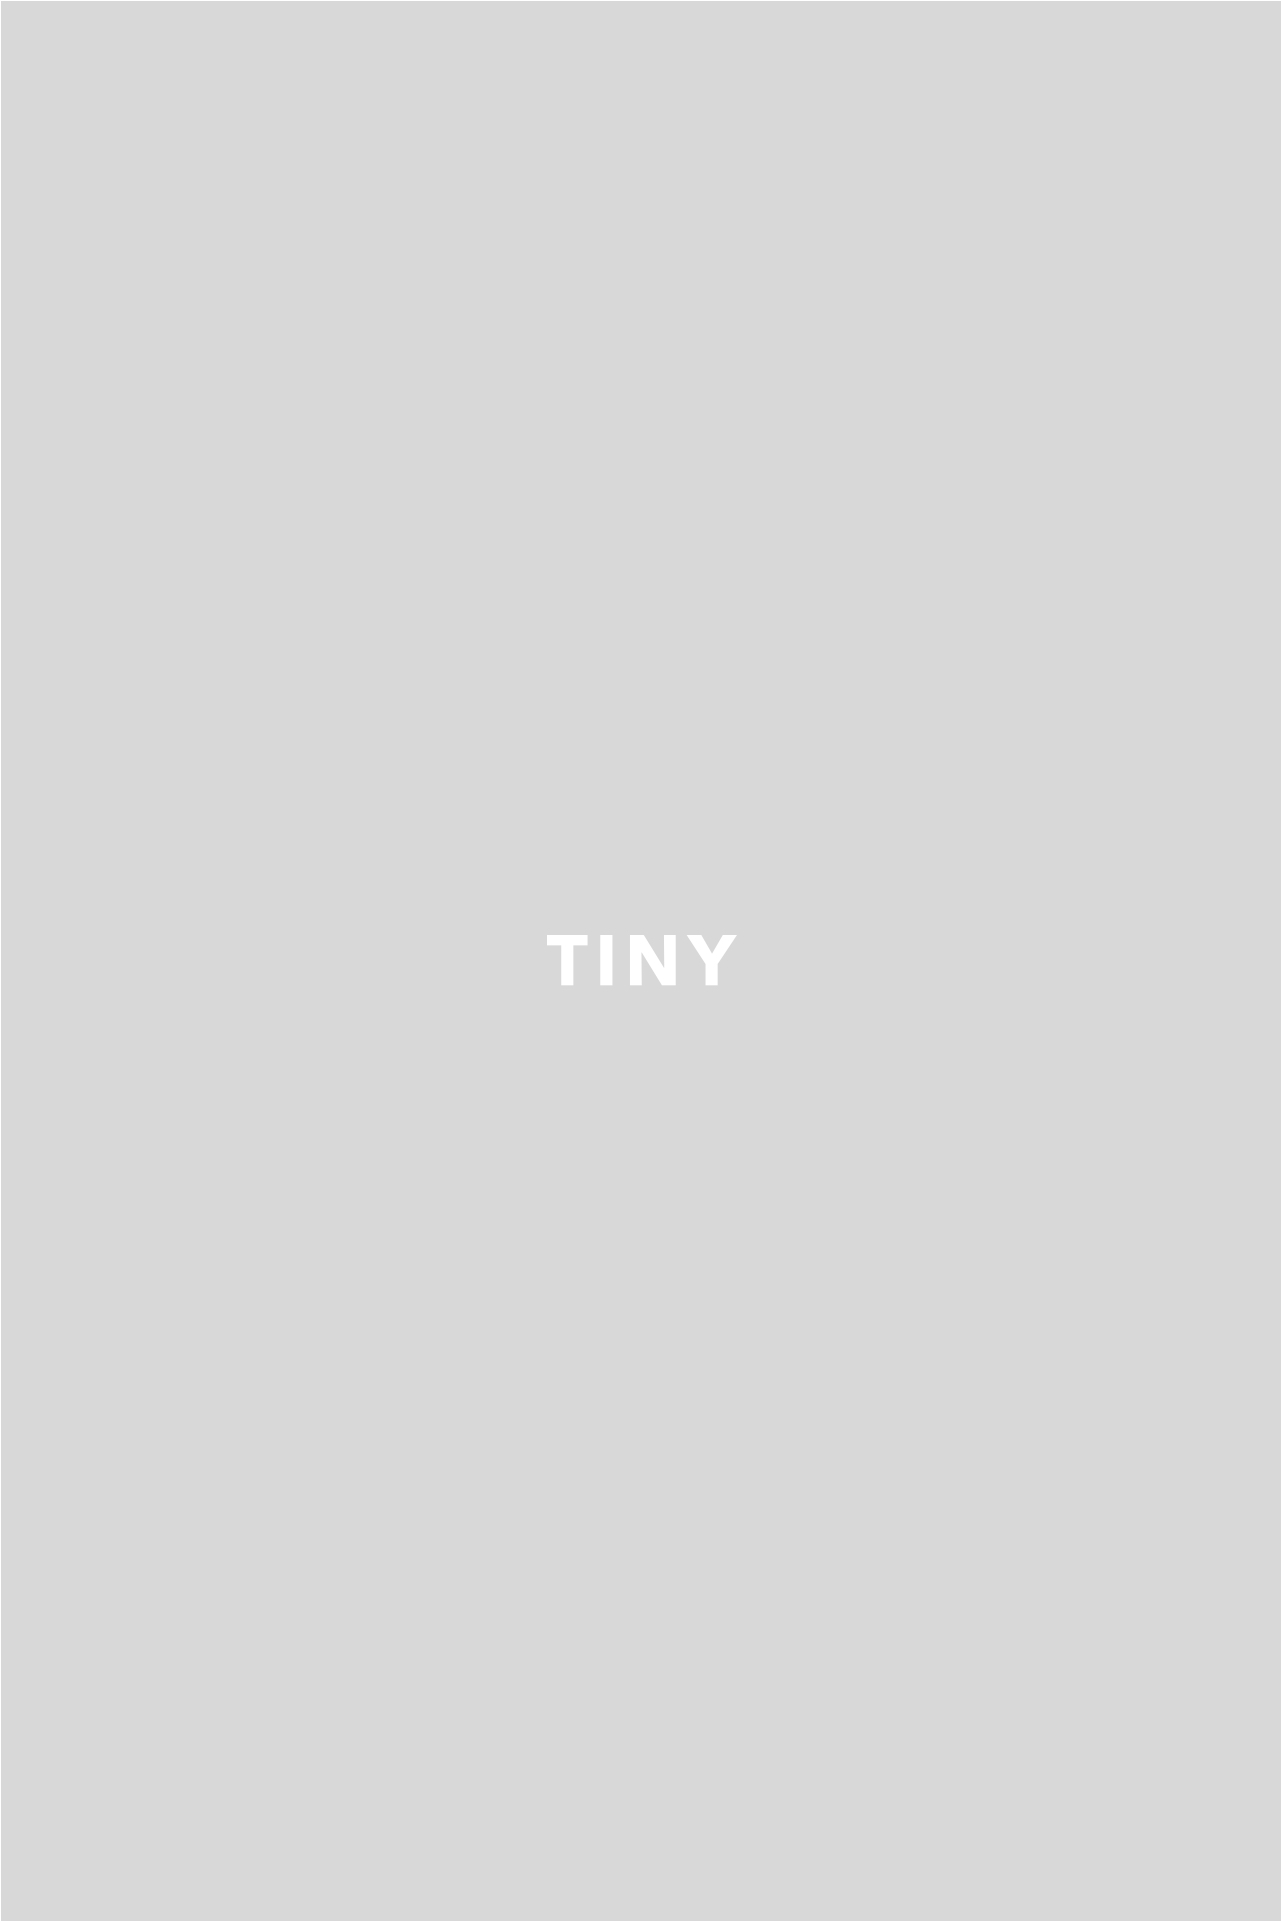 New Balance 720 - Woman - Grey | TINYCOTTONS Europe